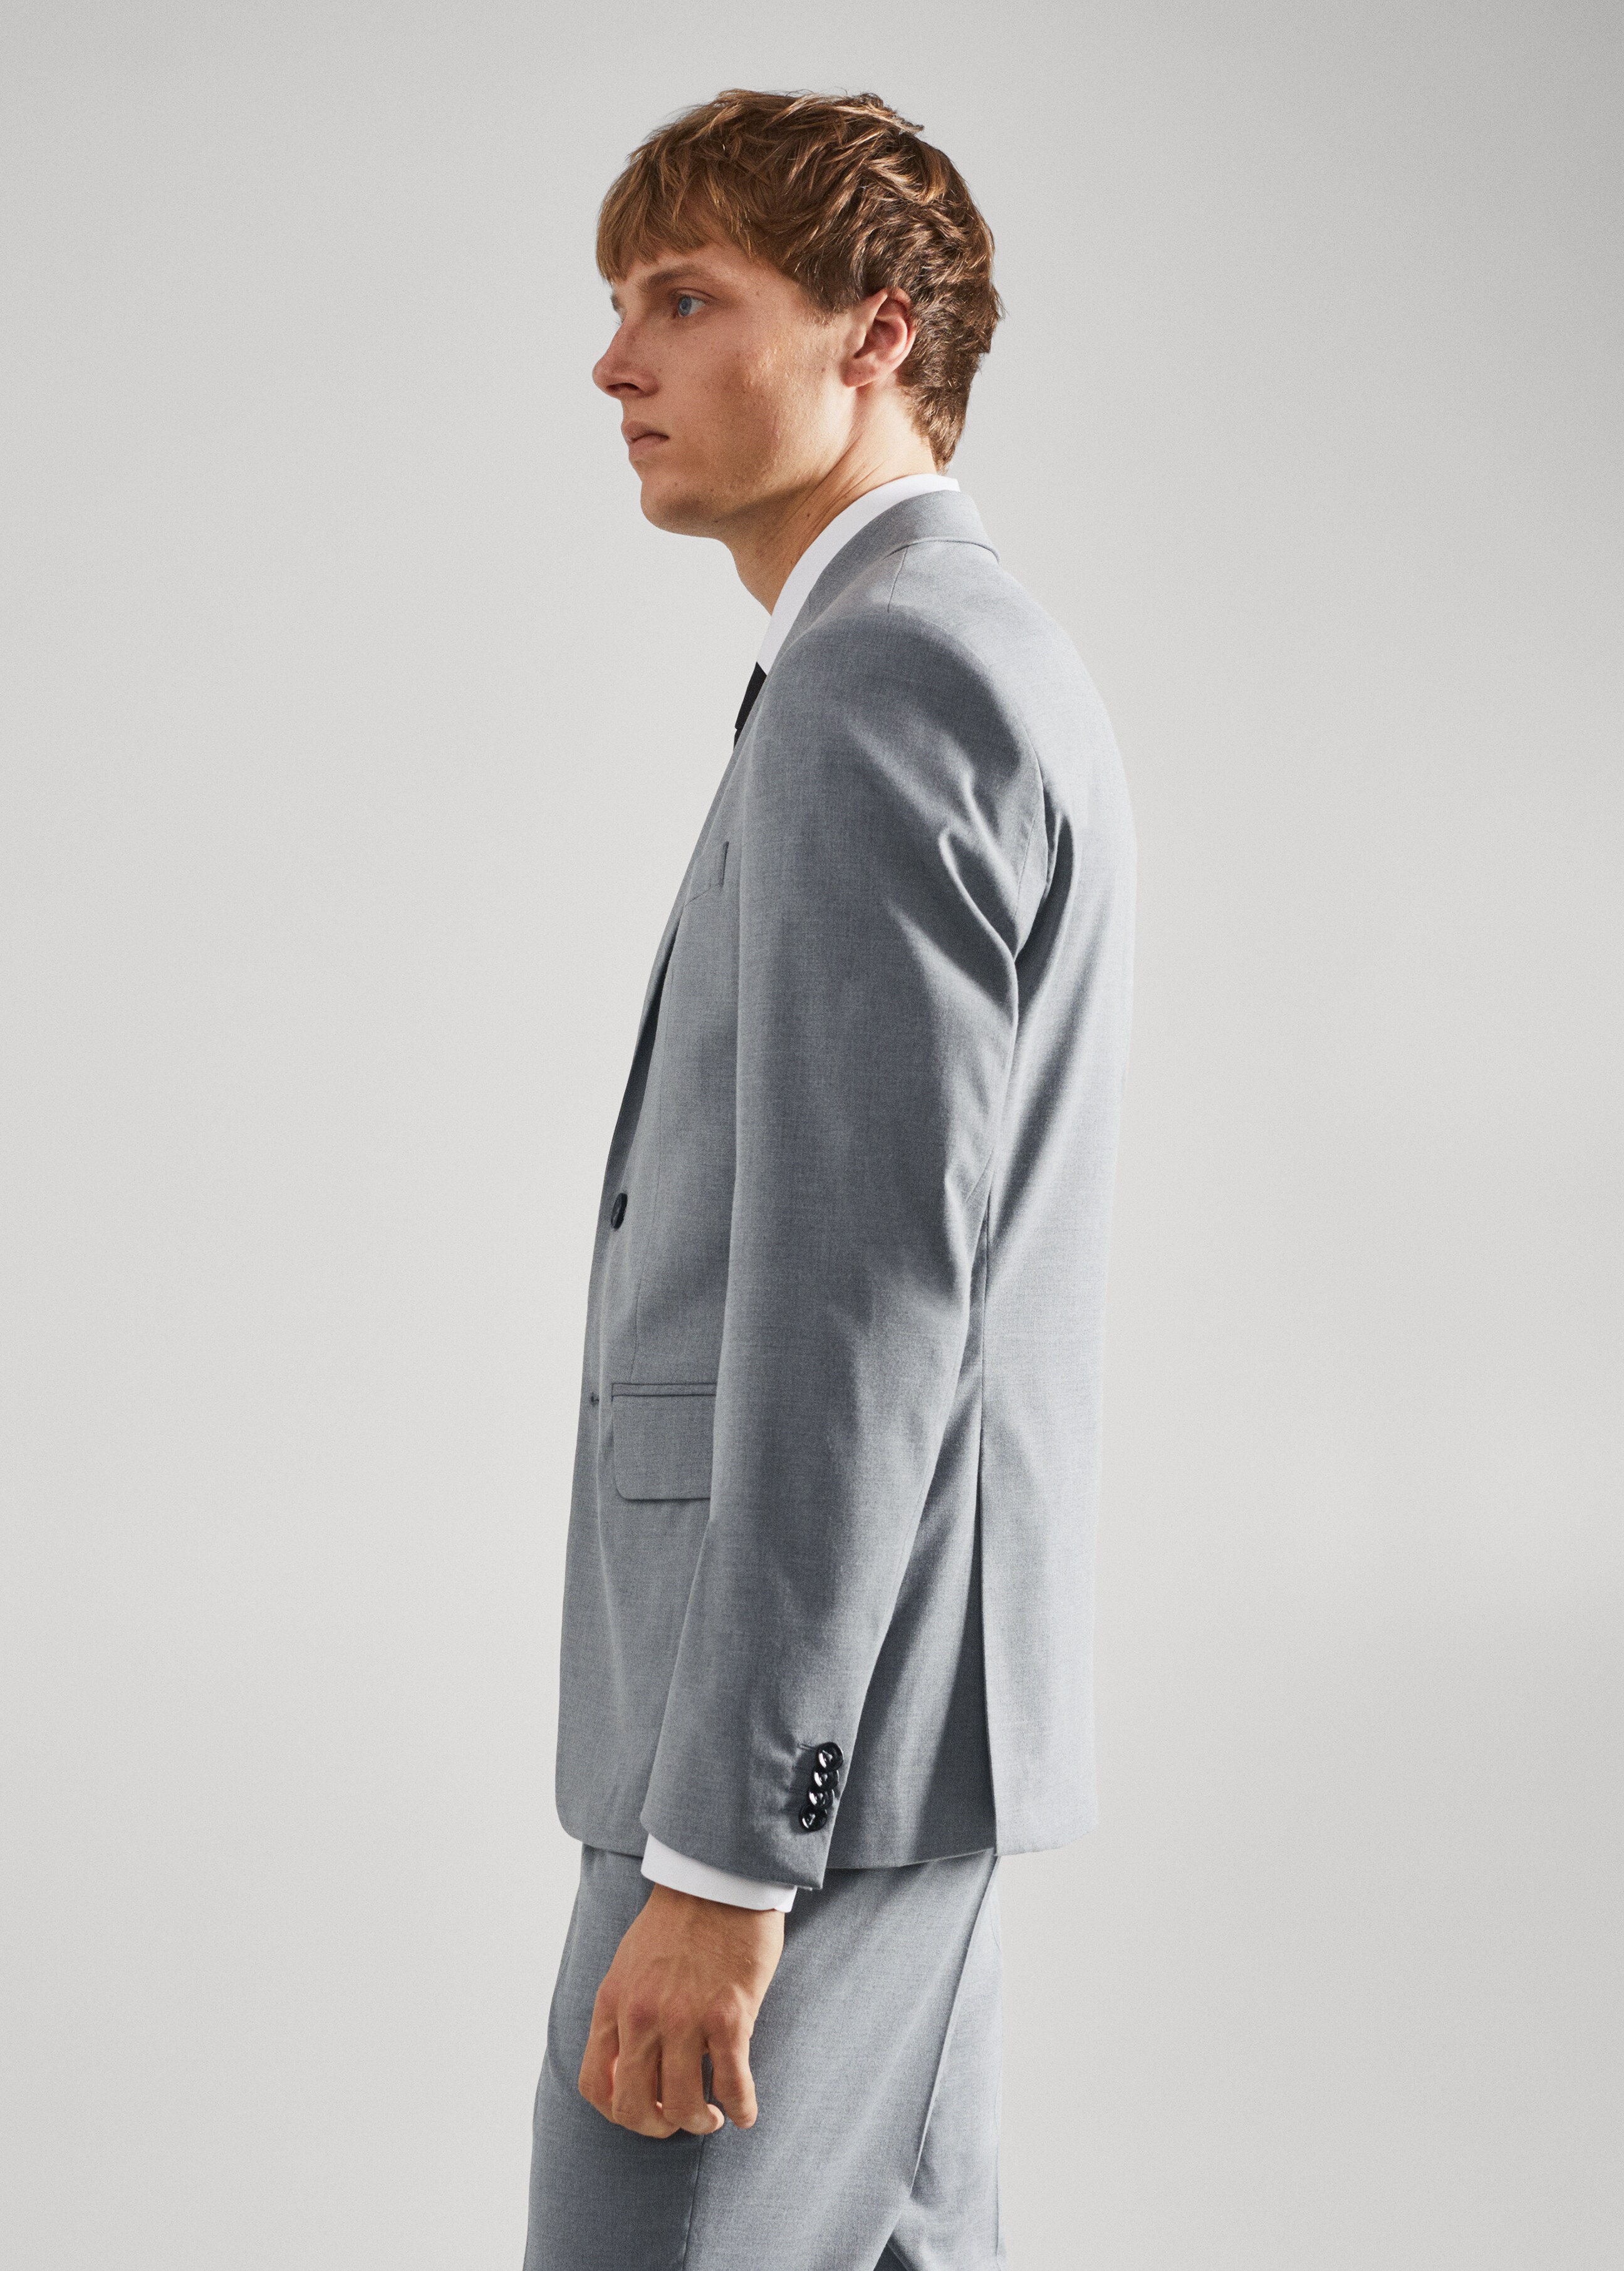 Slim-fit suit blazer - Details of the article 6